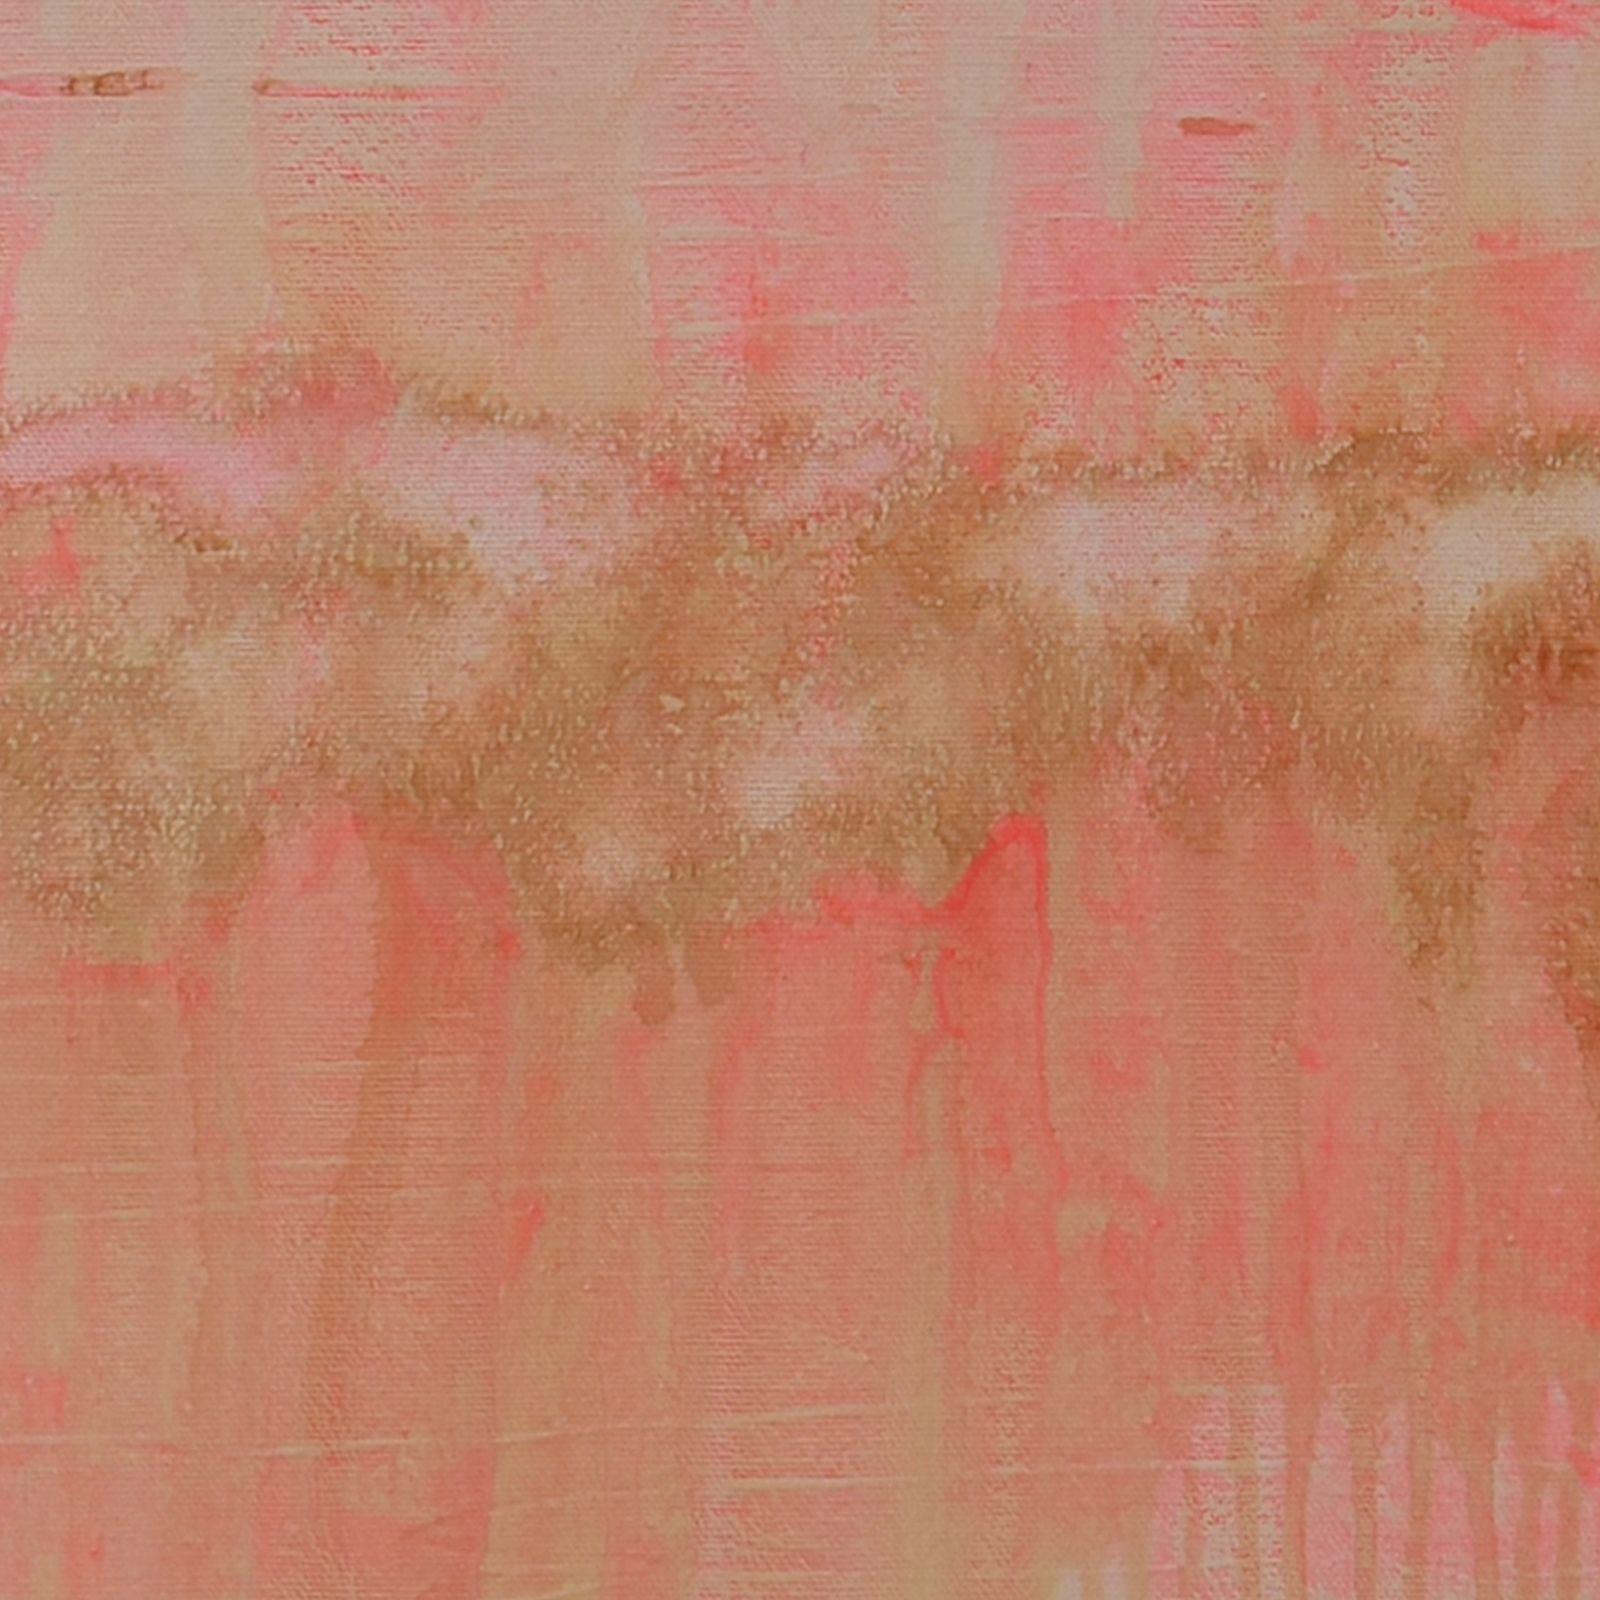 â€œPink Blissâ€ is a lovely atmospheric abstract painting on canvas. It was created by layering acrylic paint in pink and brown hues. The build up of slightly different transparent shades add interest and depth to the work.Please note that